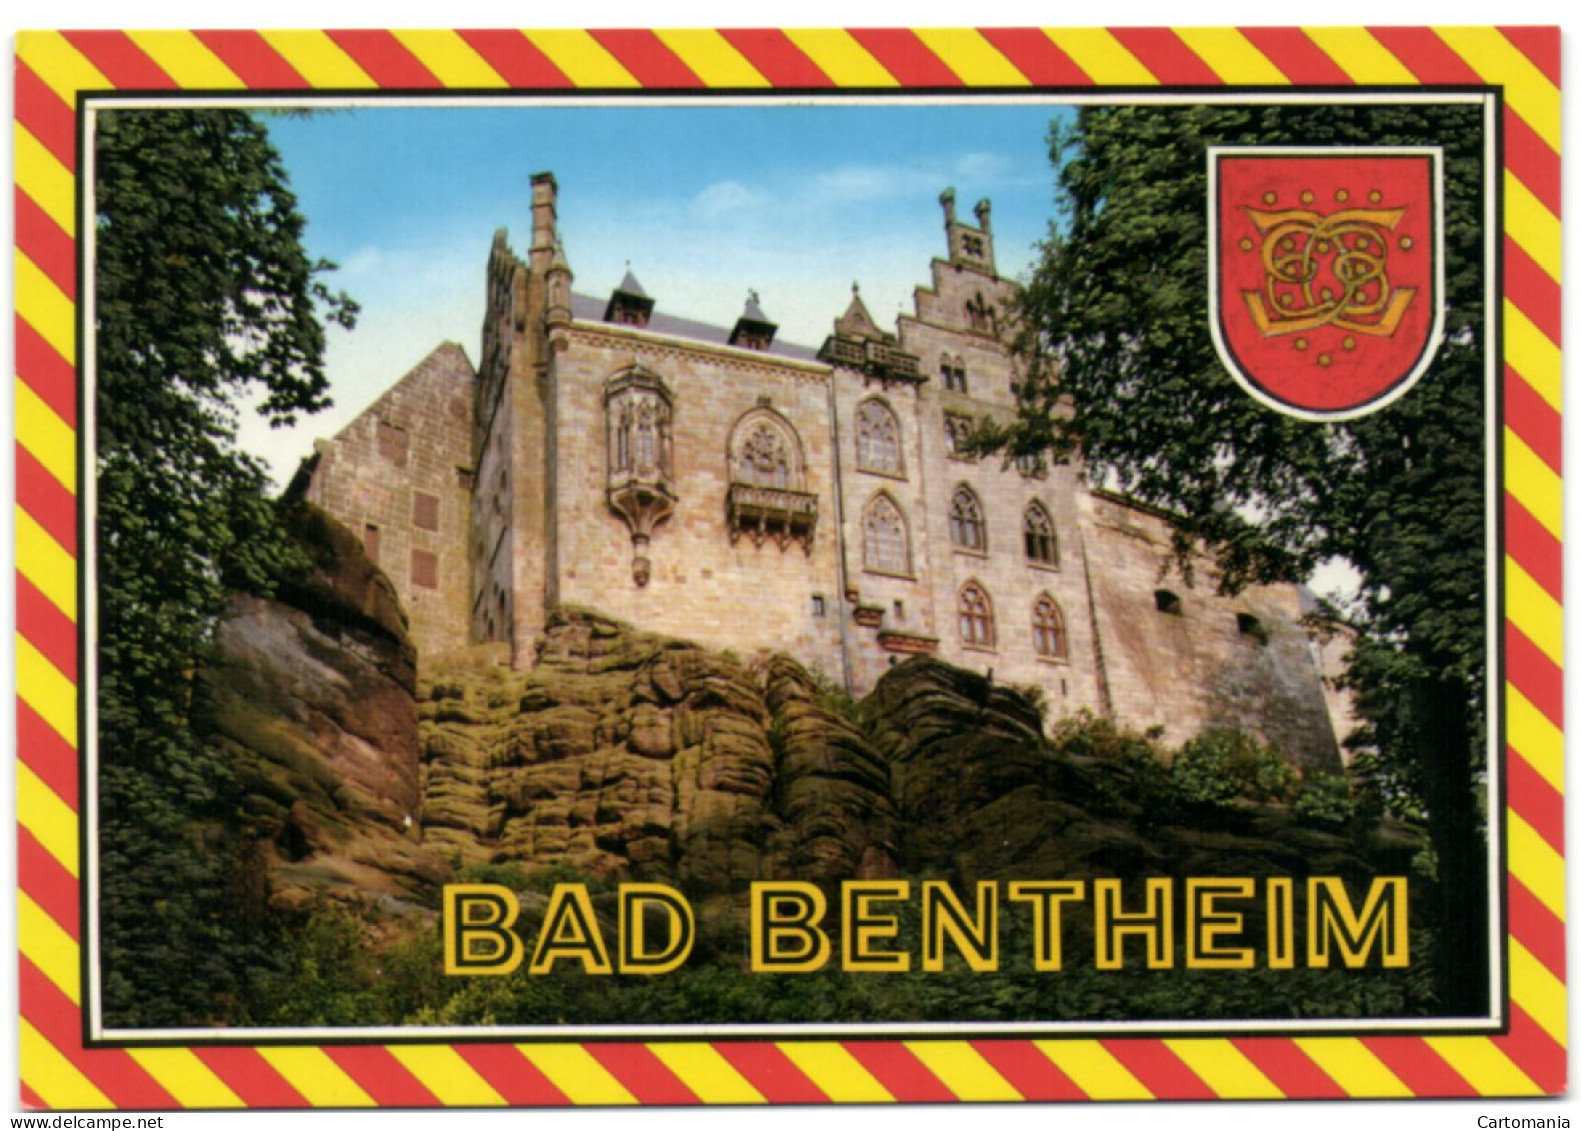 Bad Bentheim - Bad Bentheim